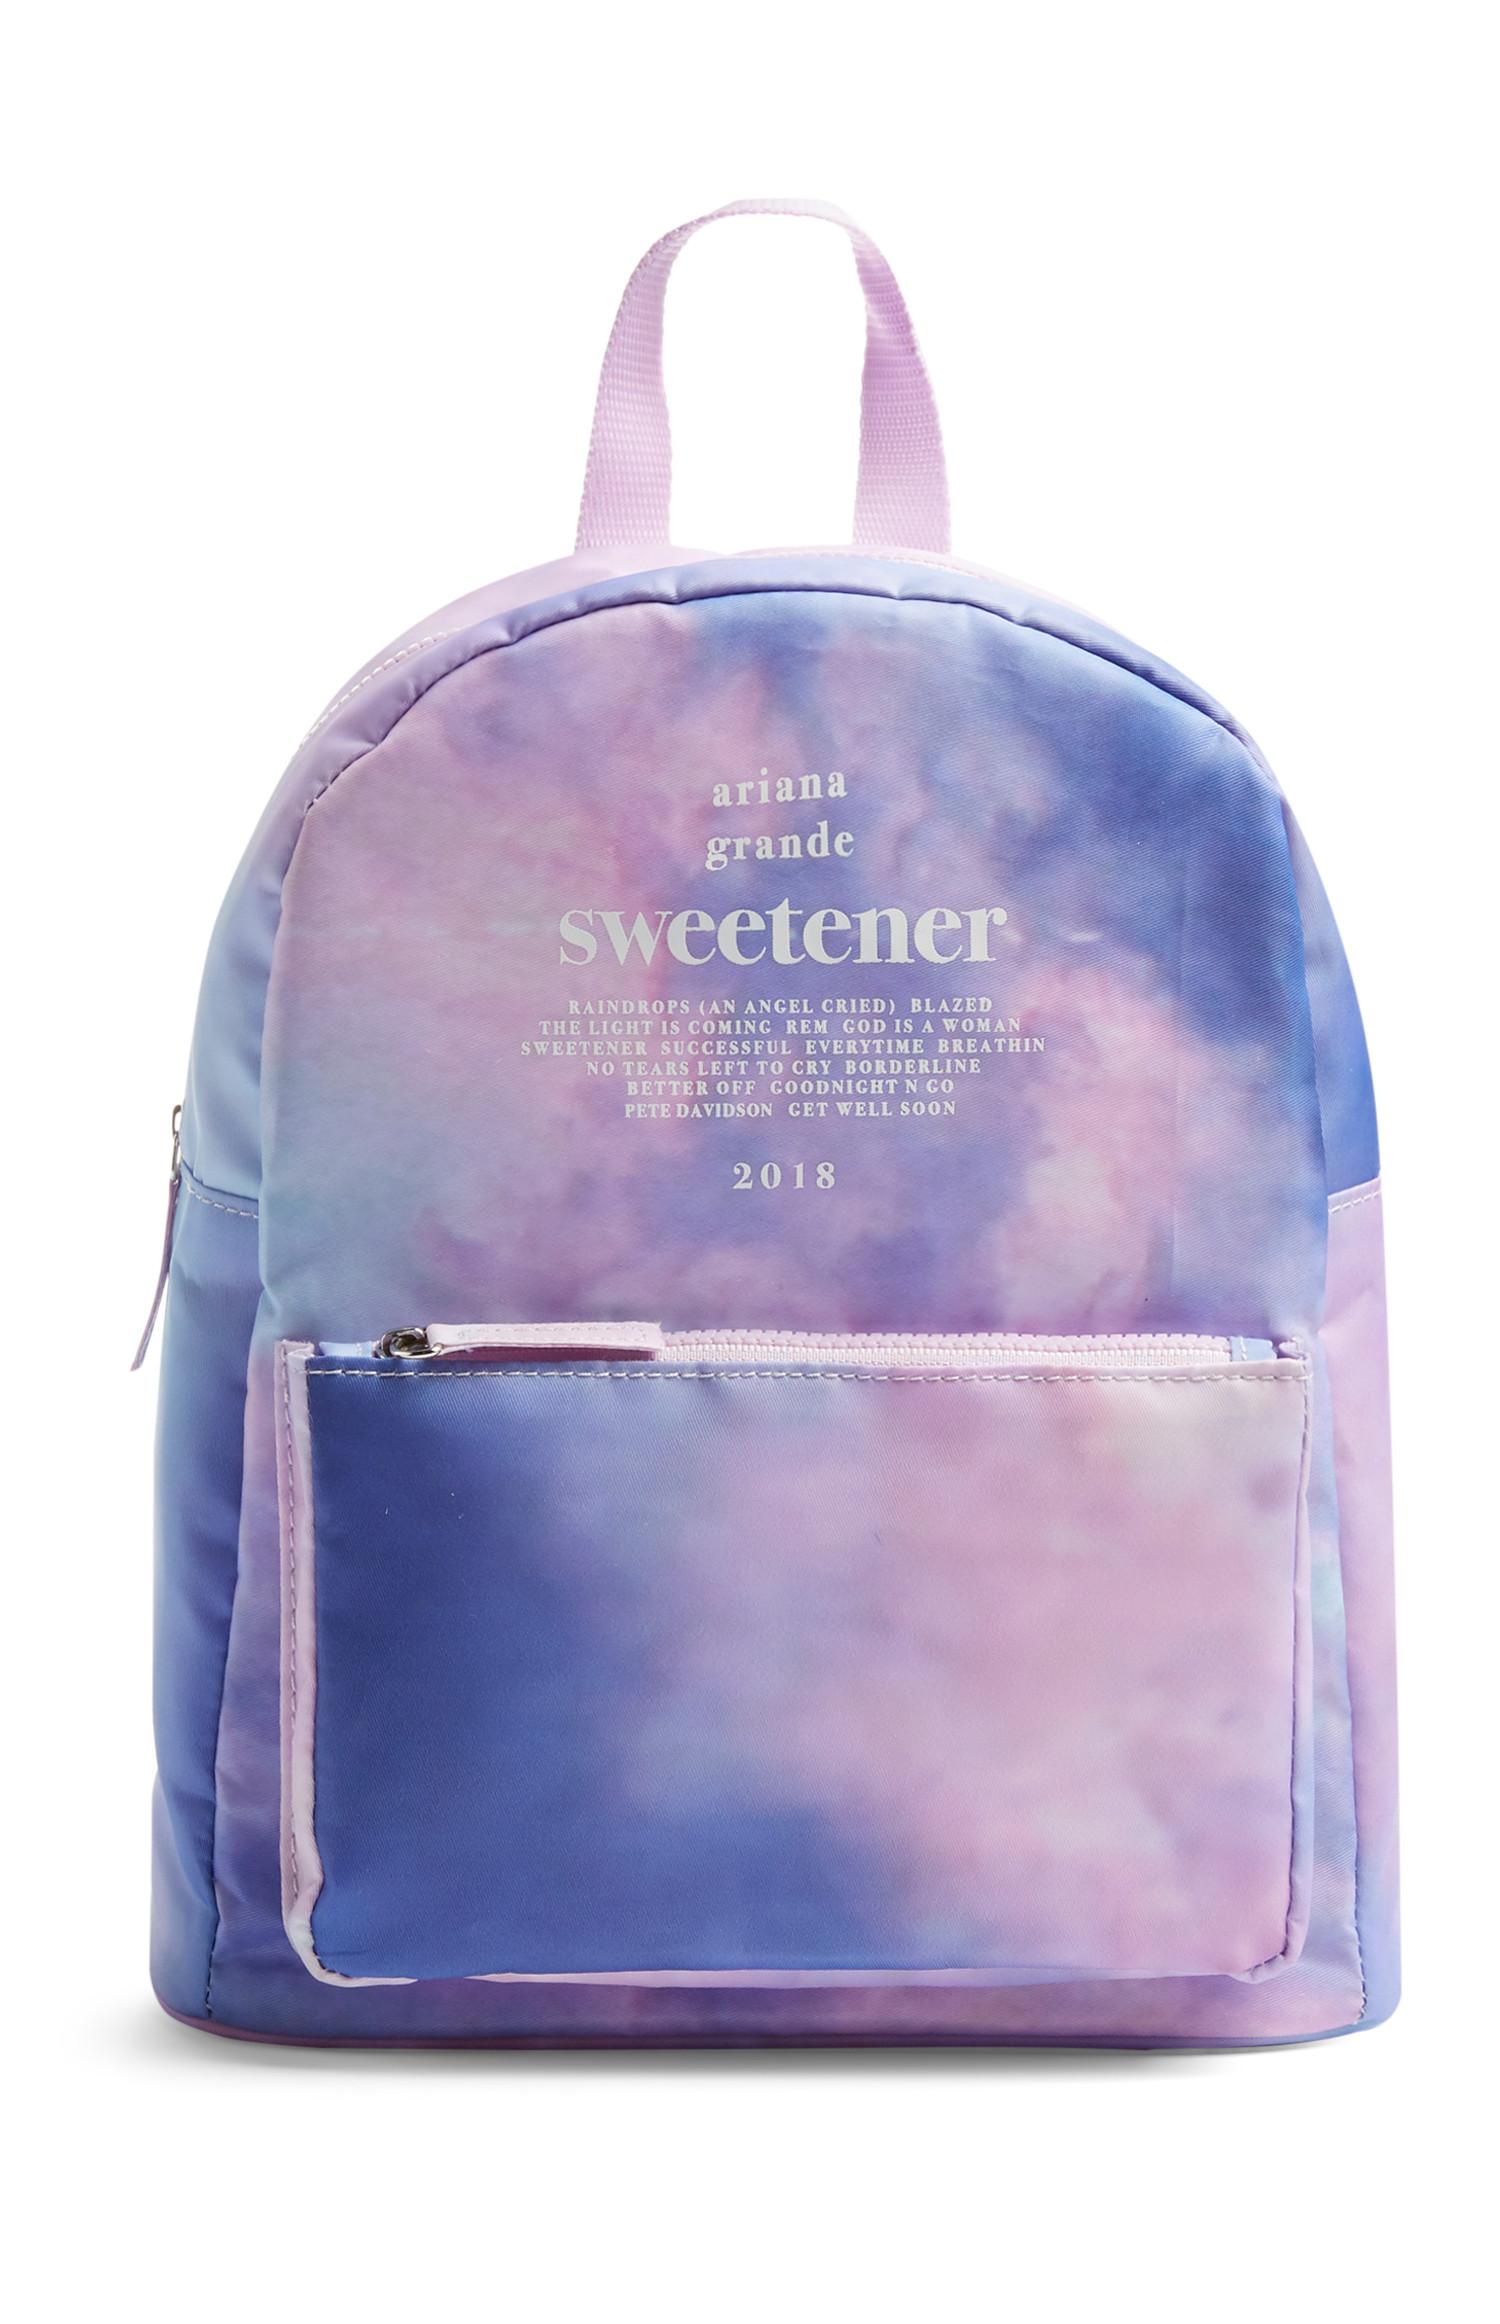 Ariana Grande Sweetener Backpack Accessories Kids